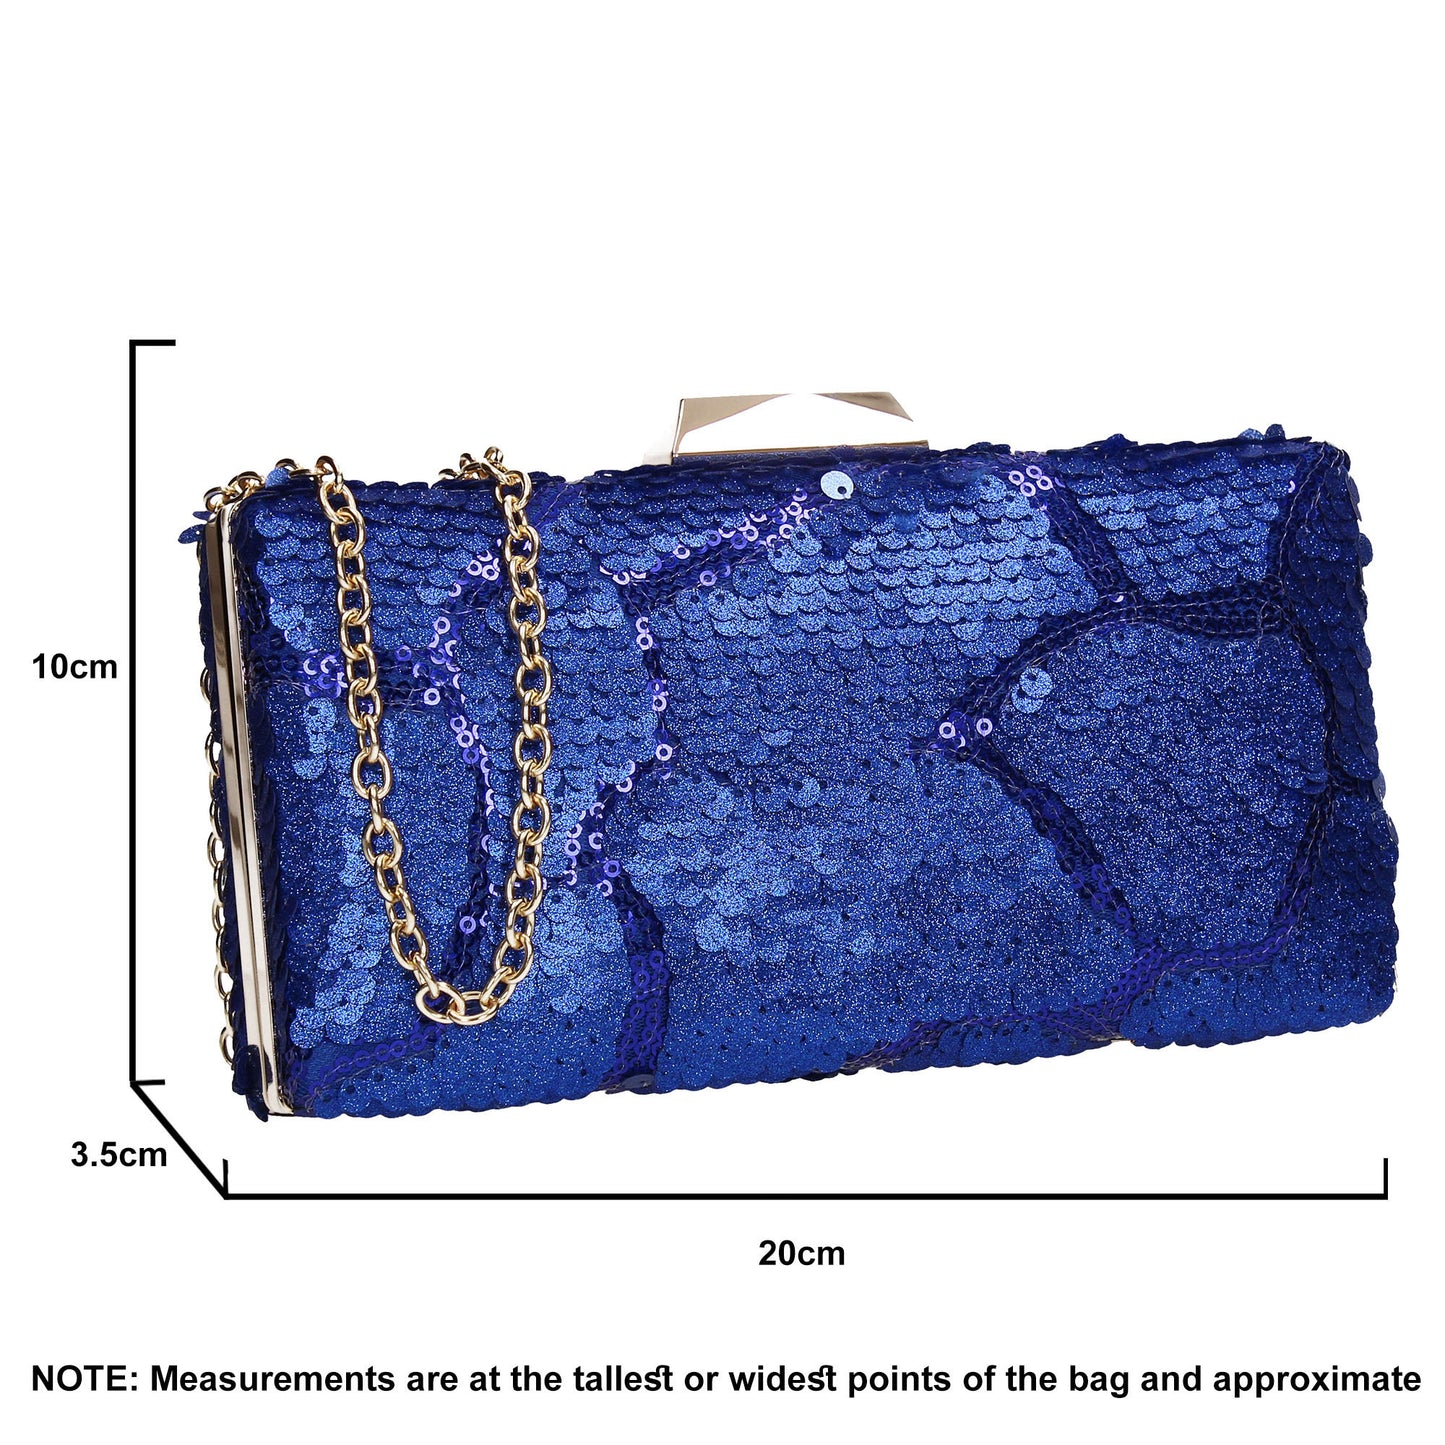 SWANKYSWANS Maggie Clutch Bag Royal Blue Cute Cheap Clutch Bag For Weddings School and Work